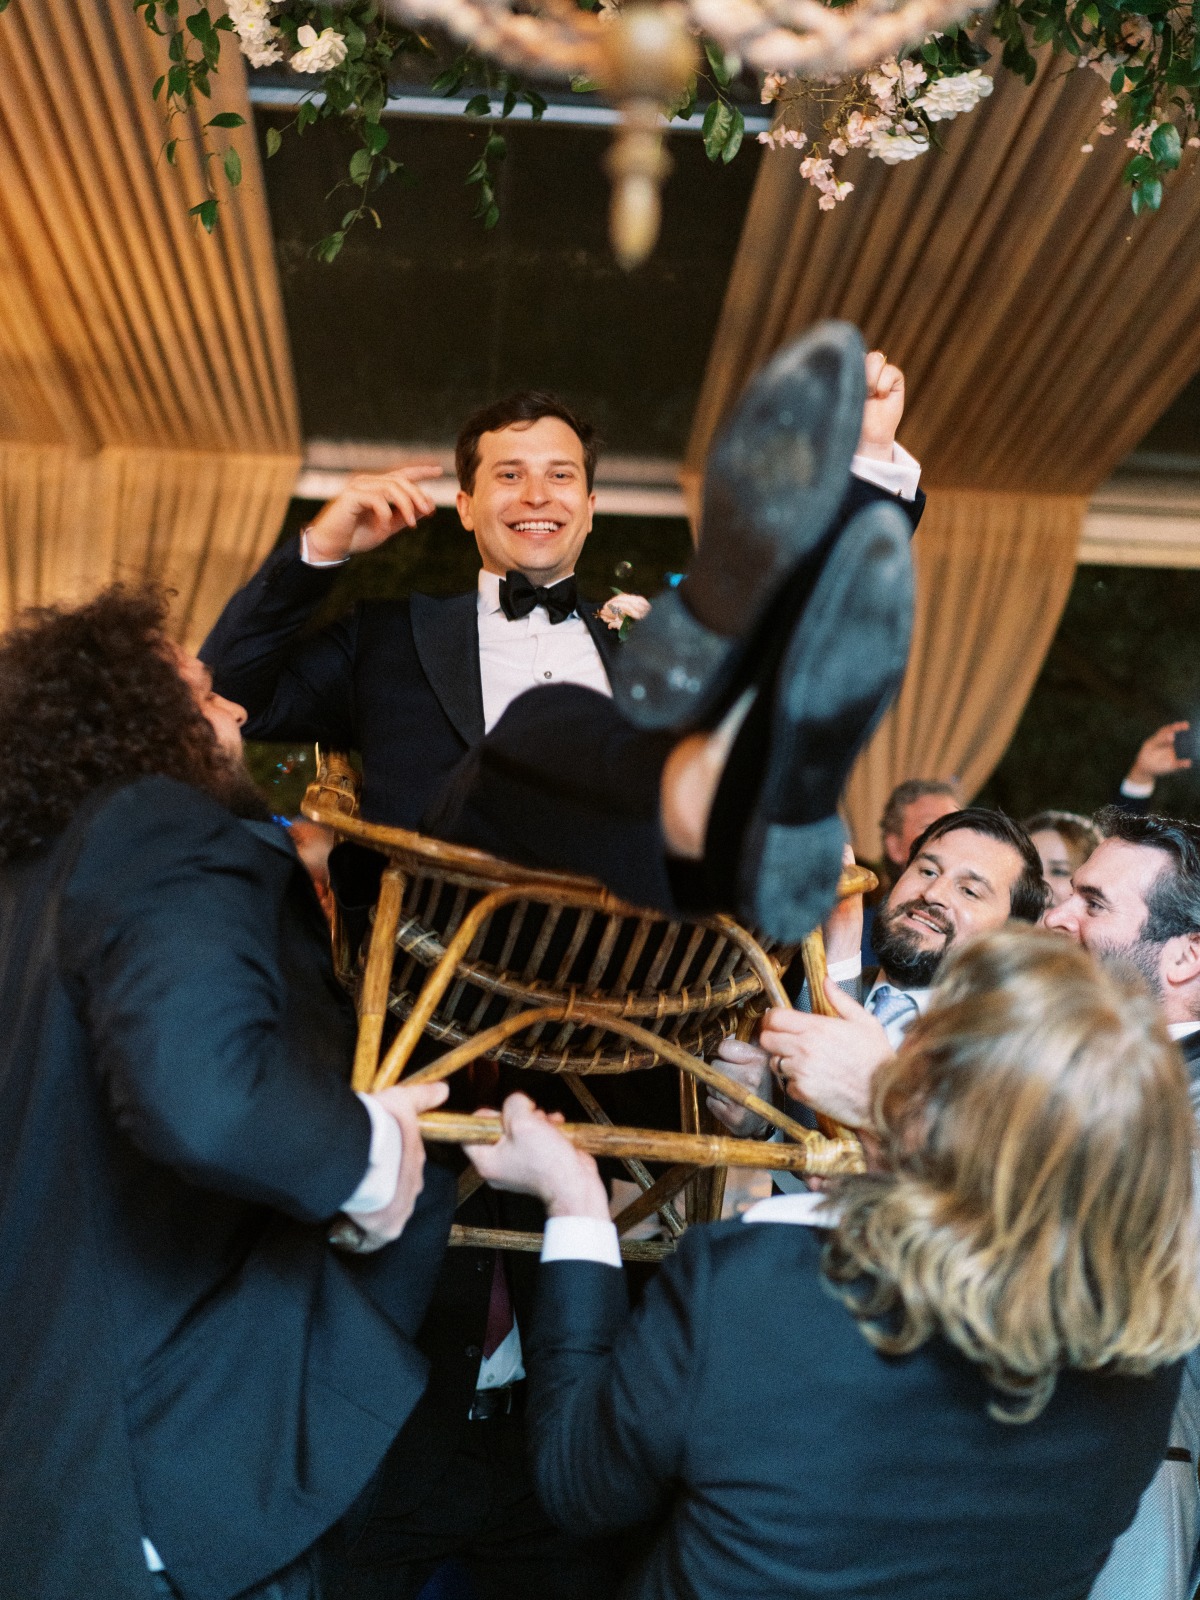 Jewish wedding traditions